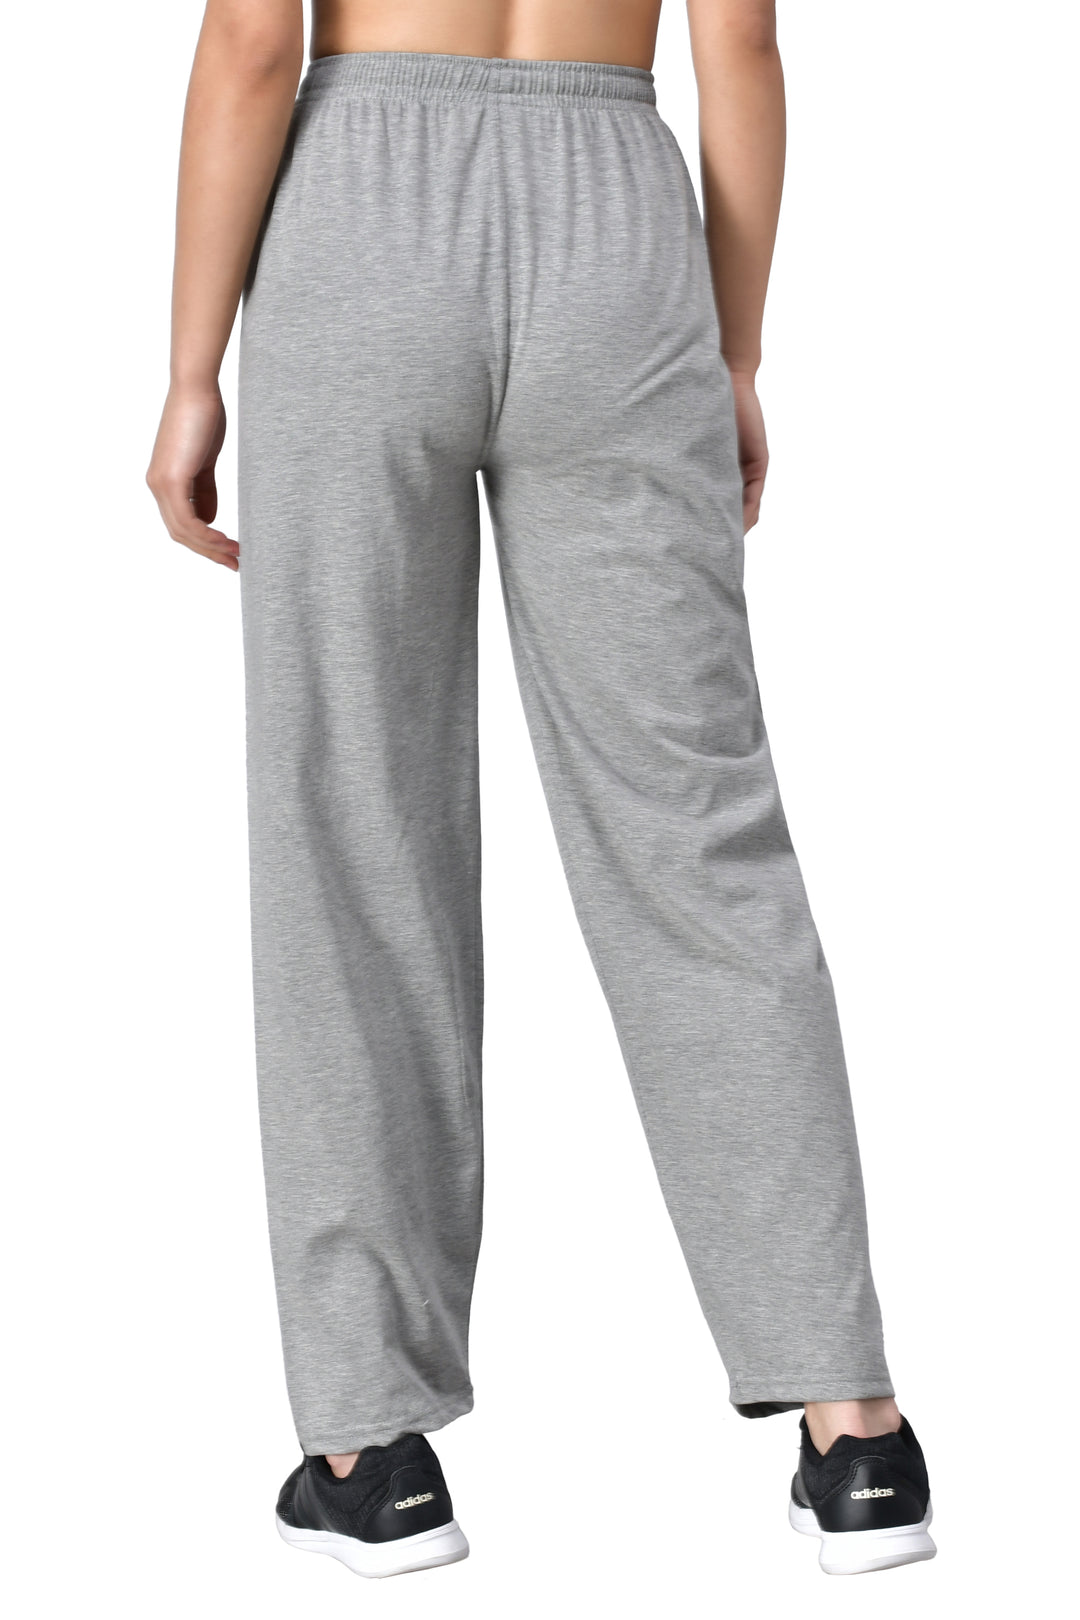 Women's Grey Track Pants with Zip Pockets - FflirtyGo